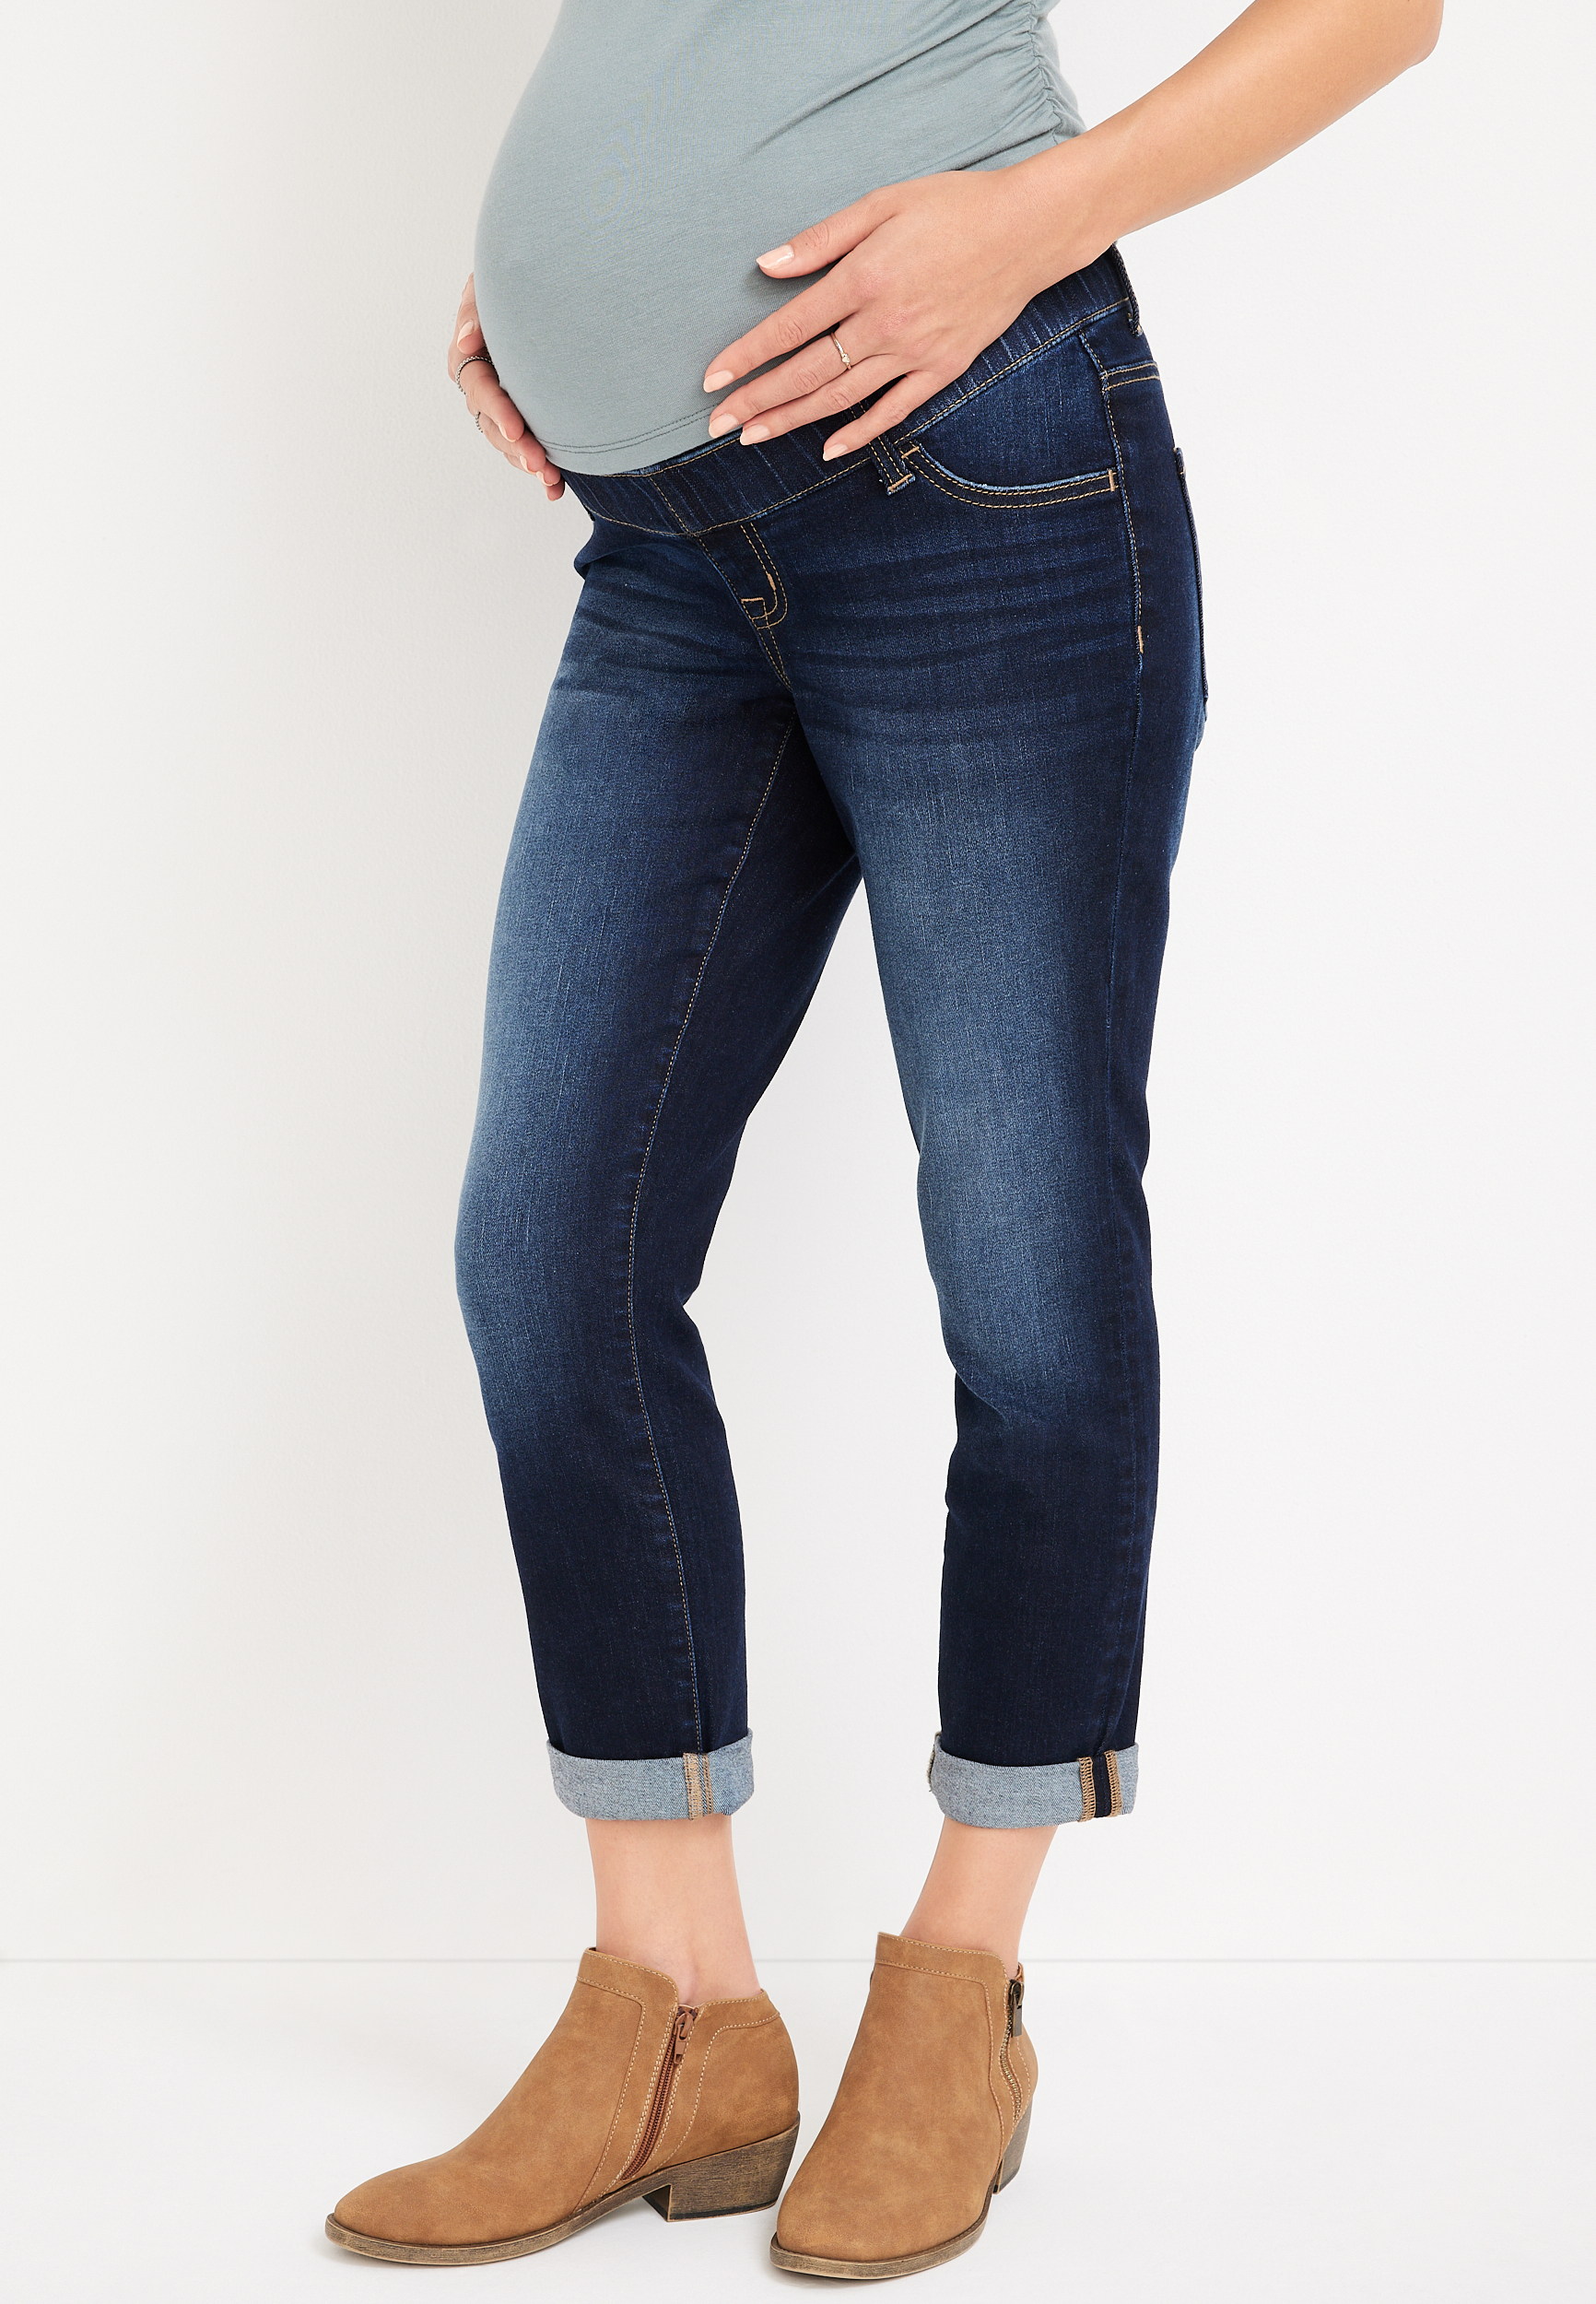 Shop Maternity Jeans, Cute Jeans For Pregnancy